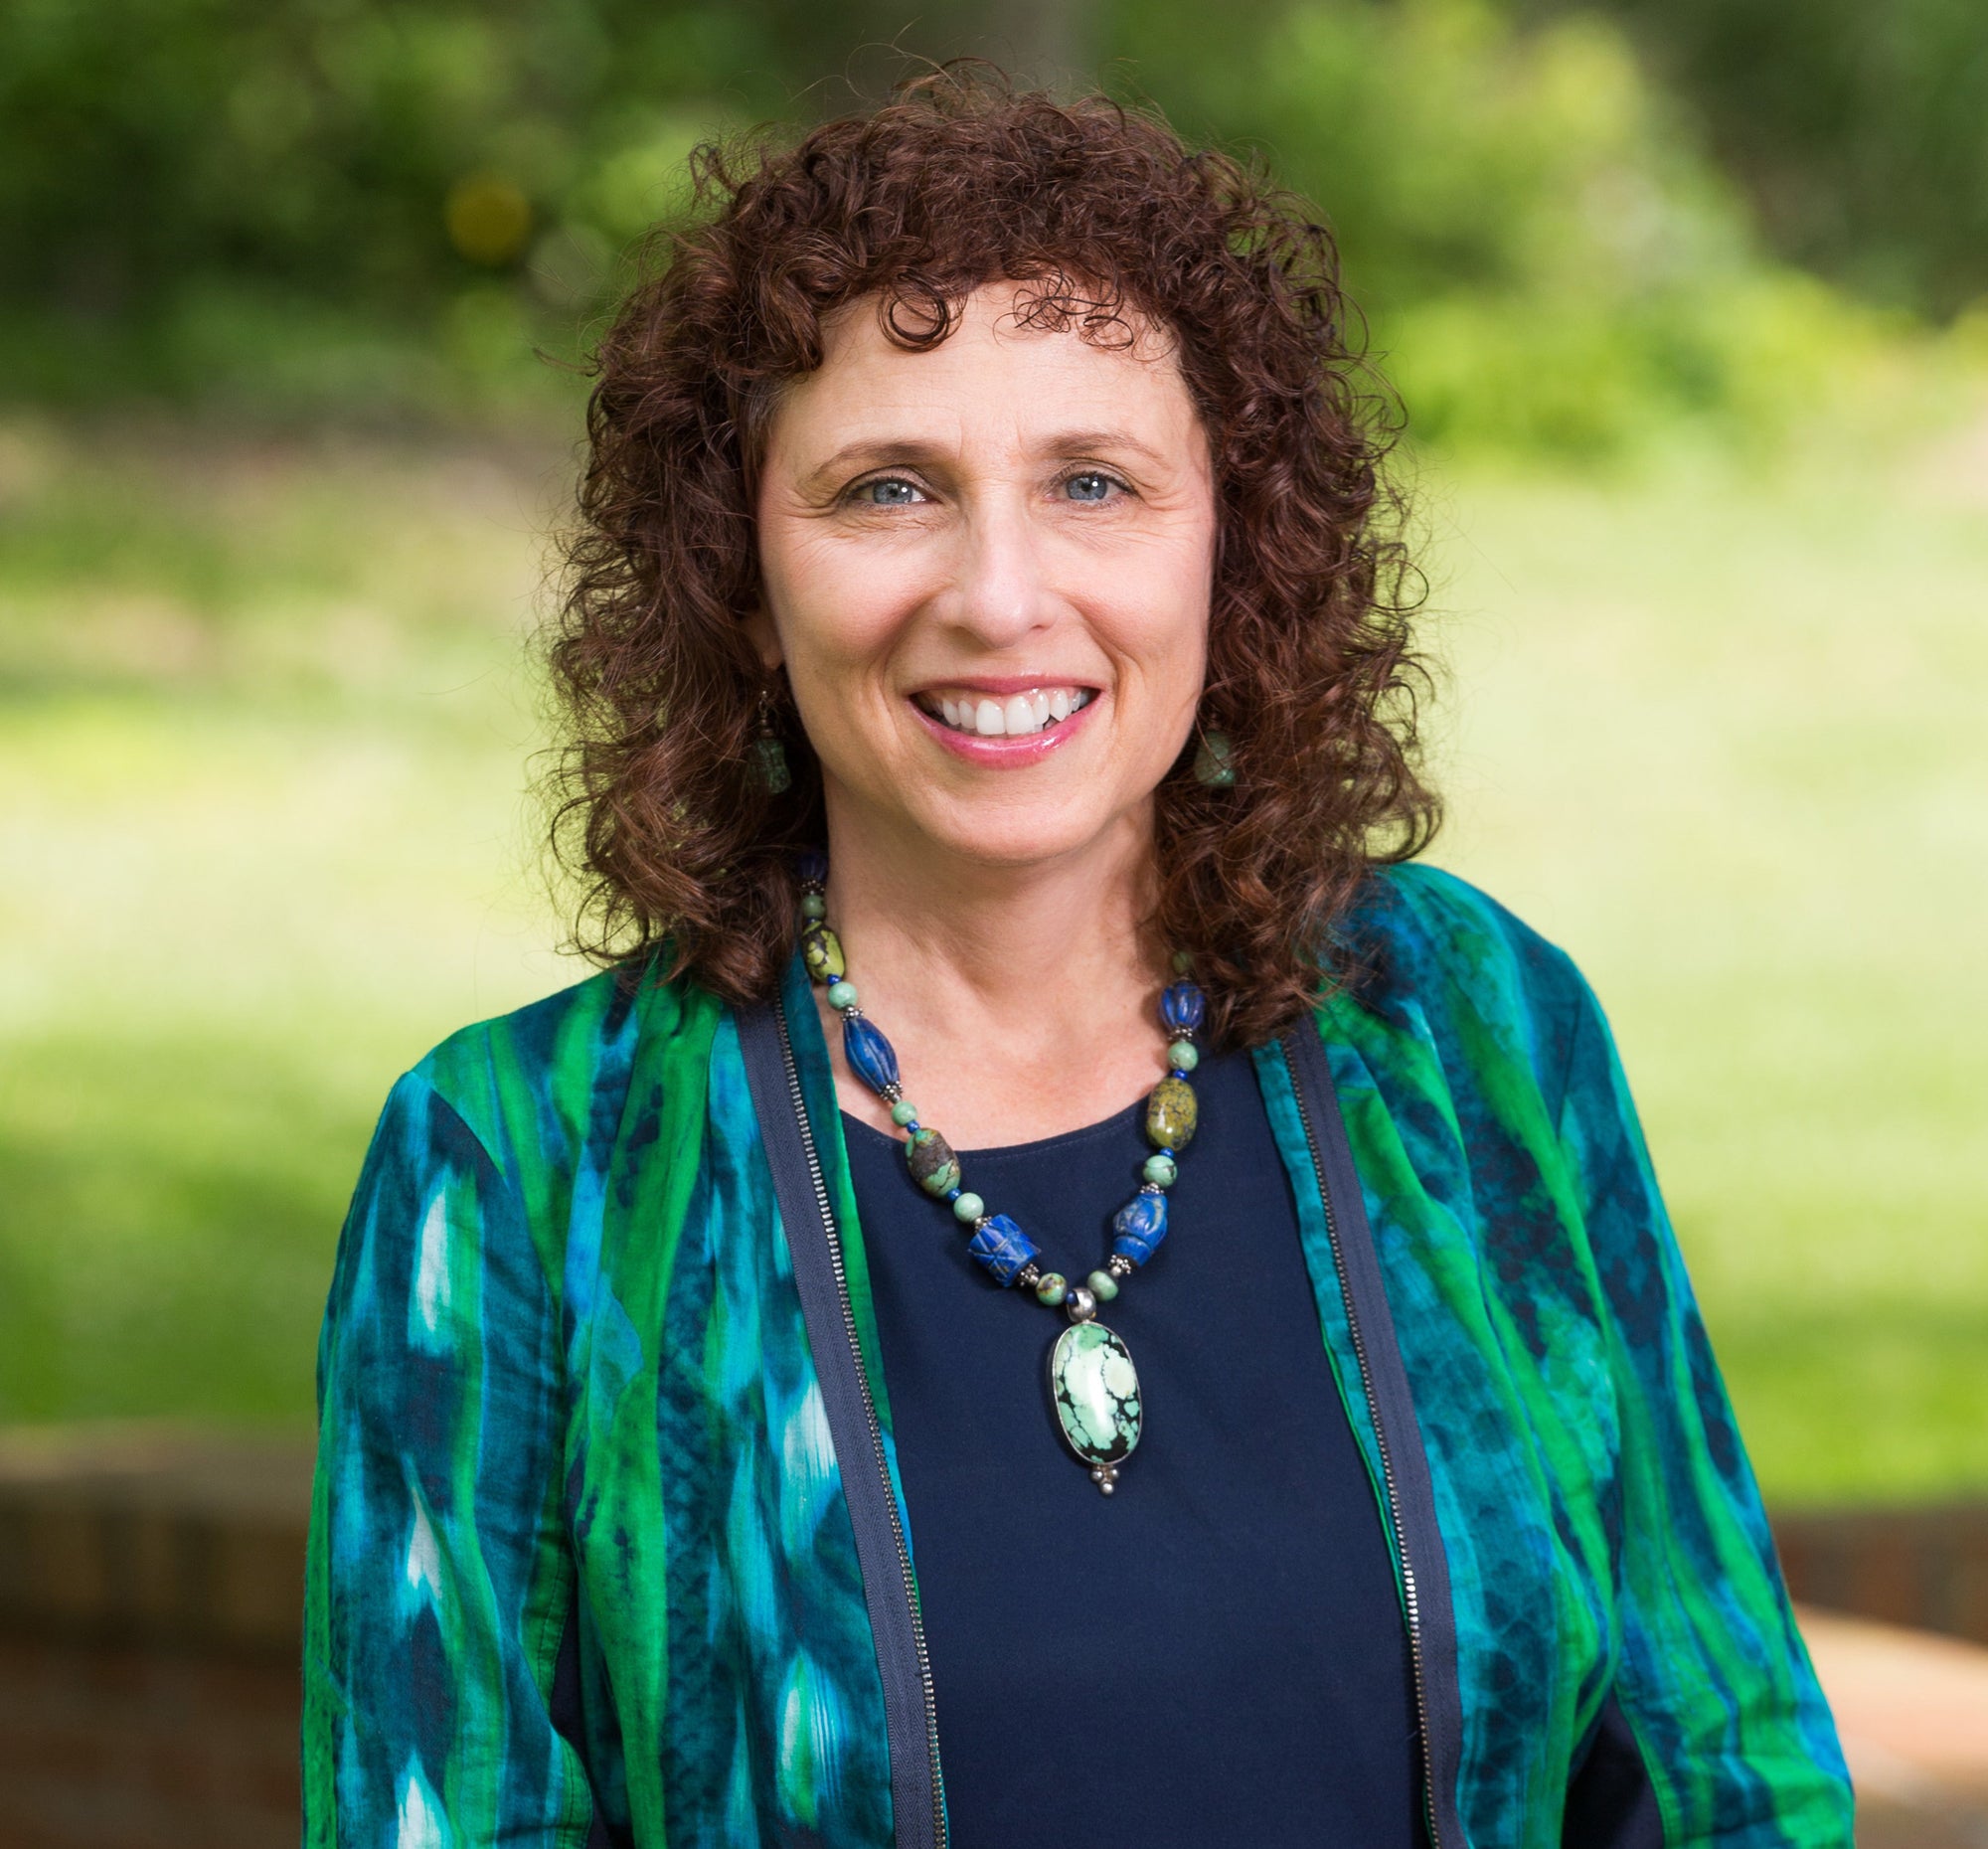 Interview with Dr. Laure Mintz - author, therapist, professor, speaker...